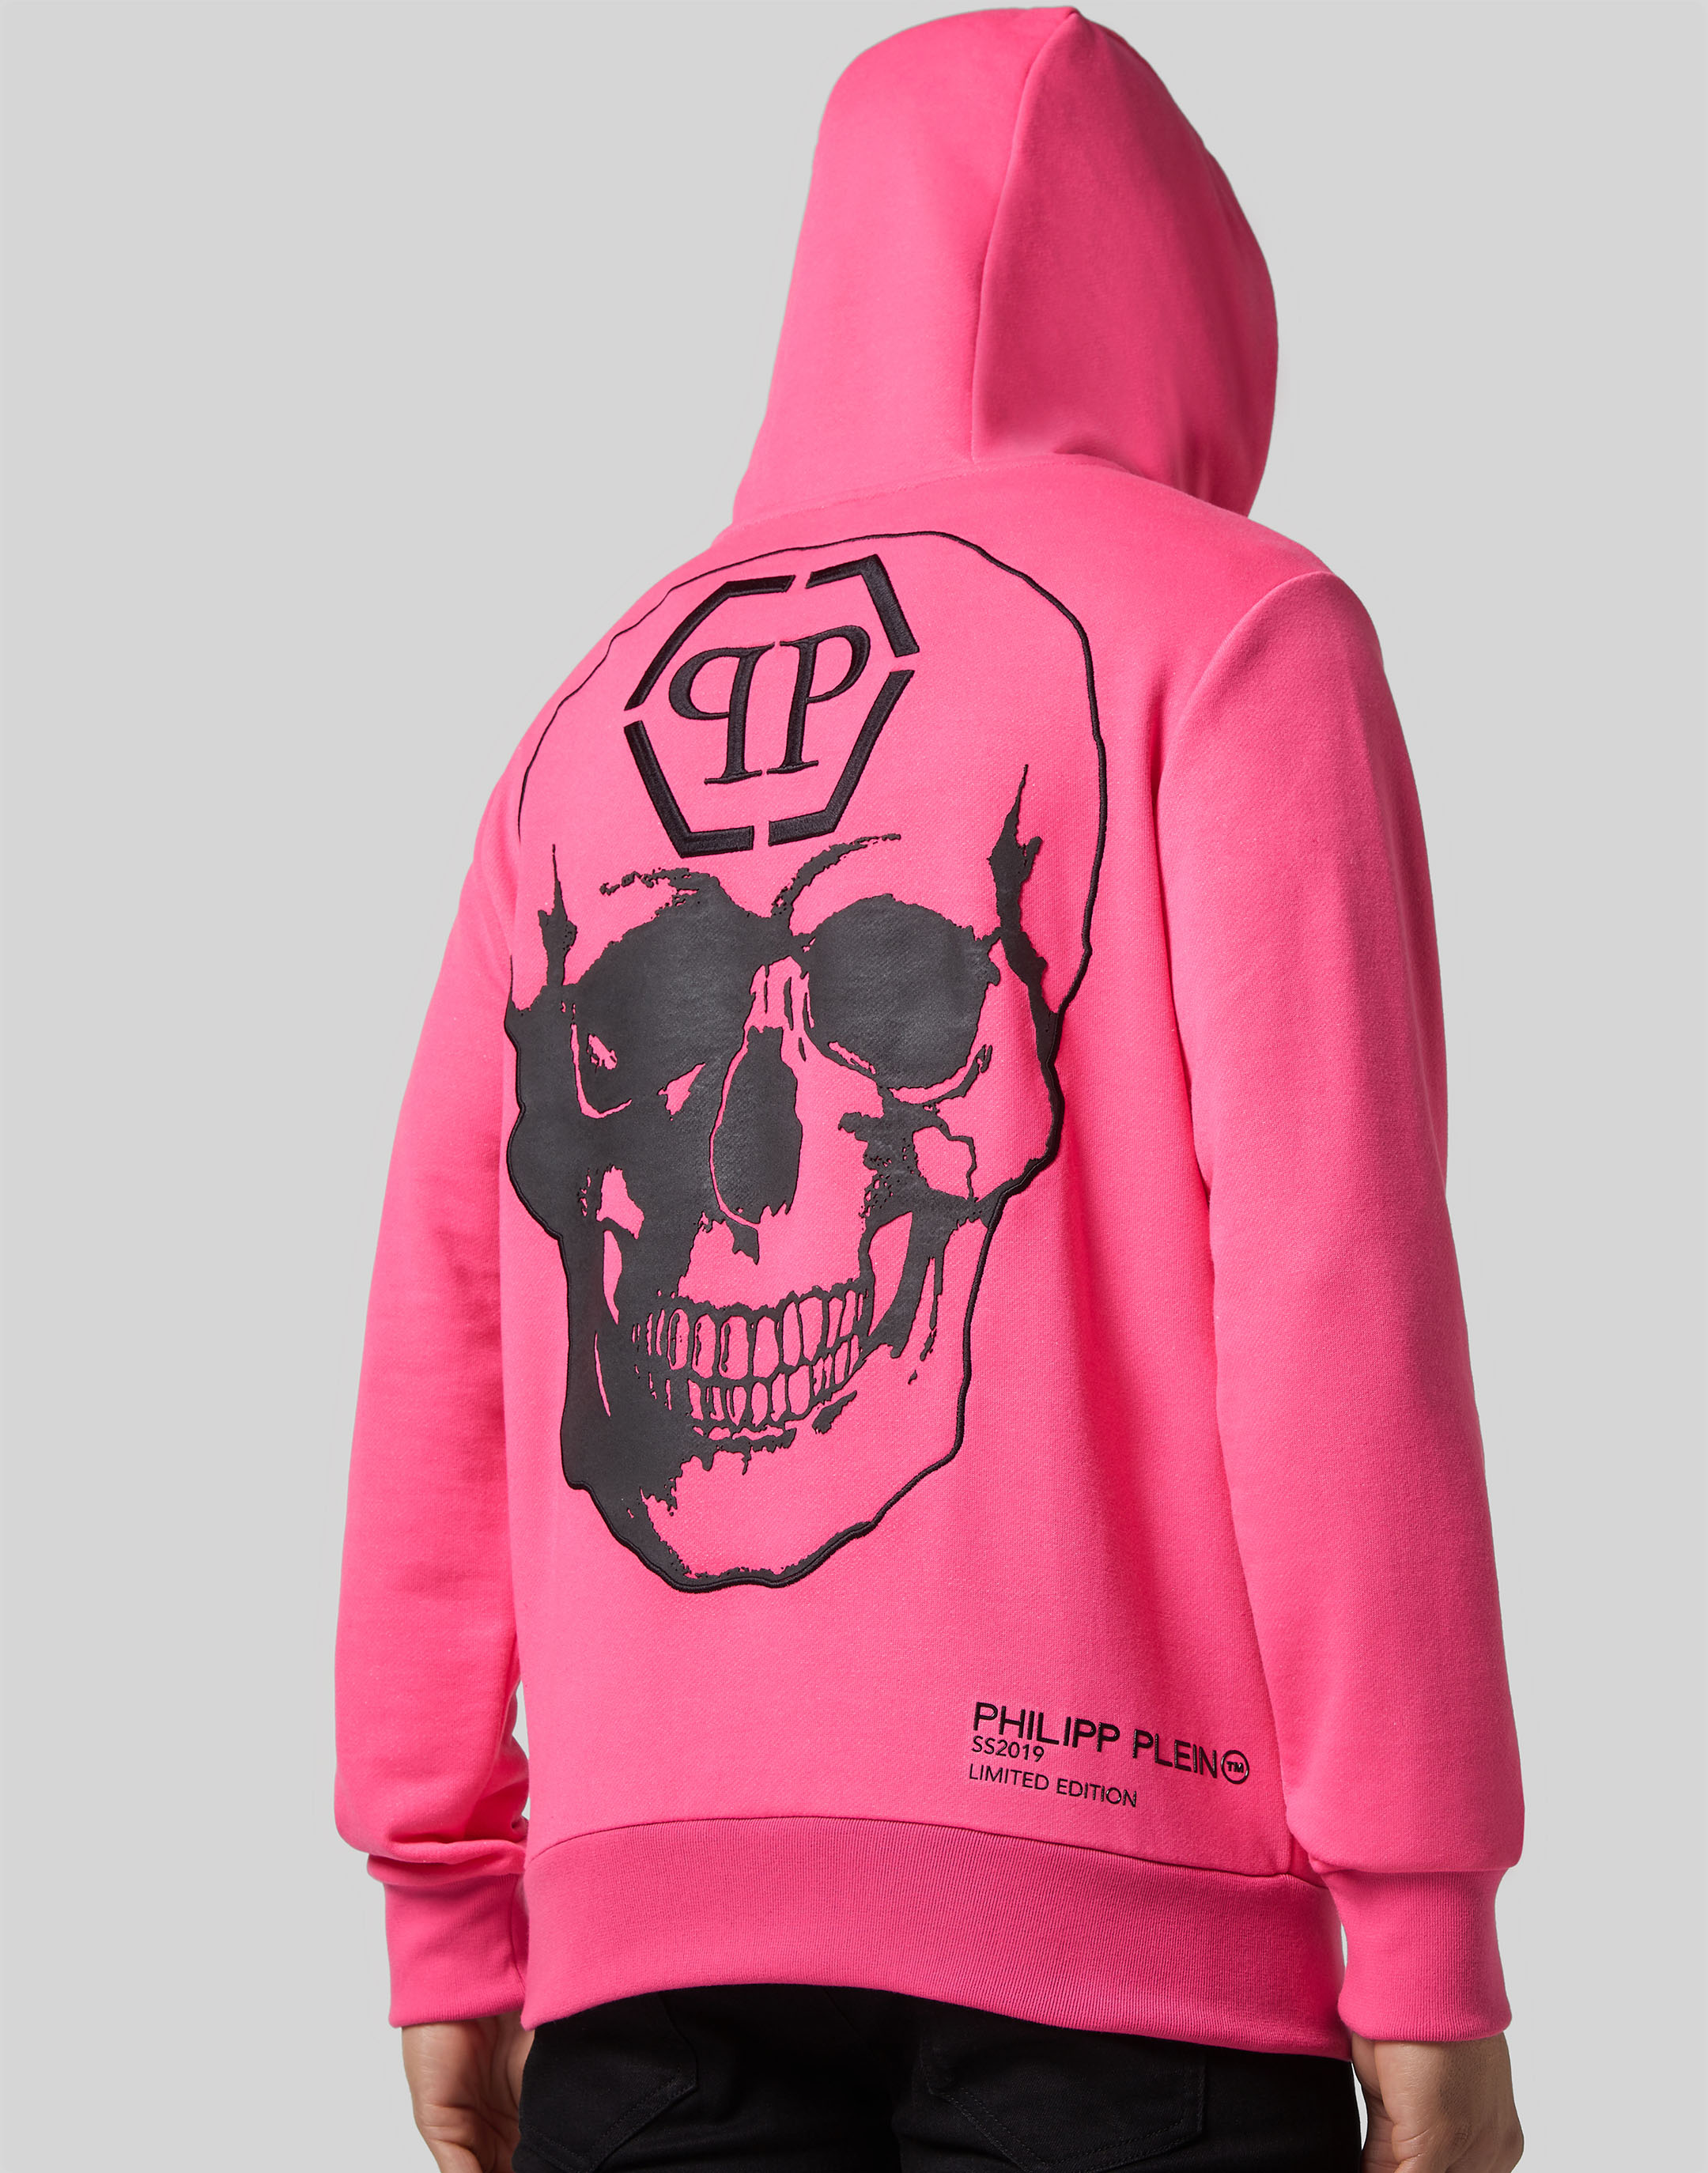 philipp plein hoodie limited edition